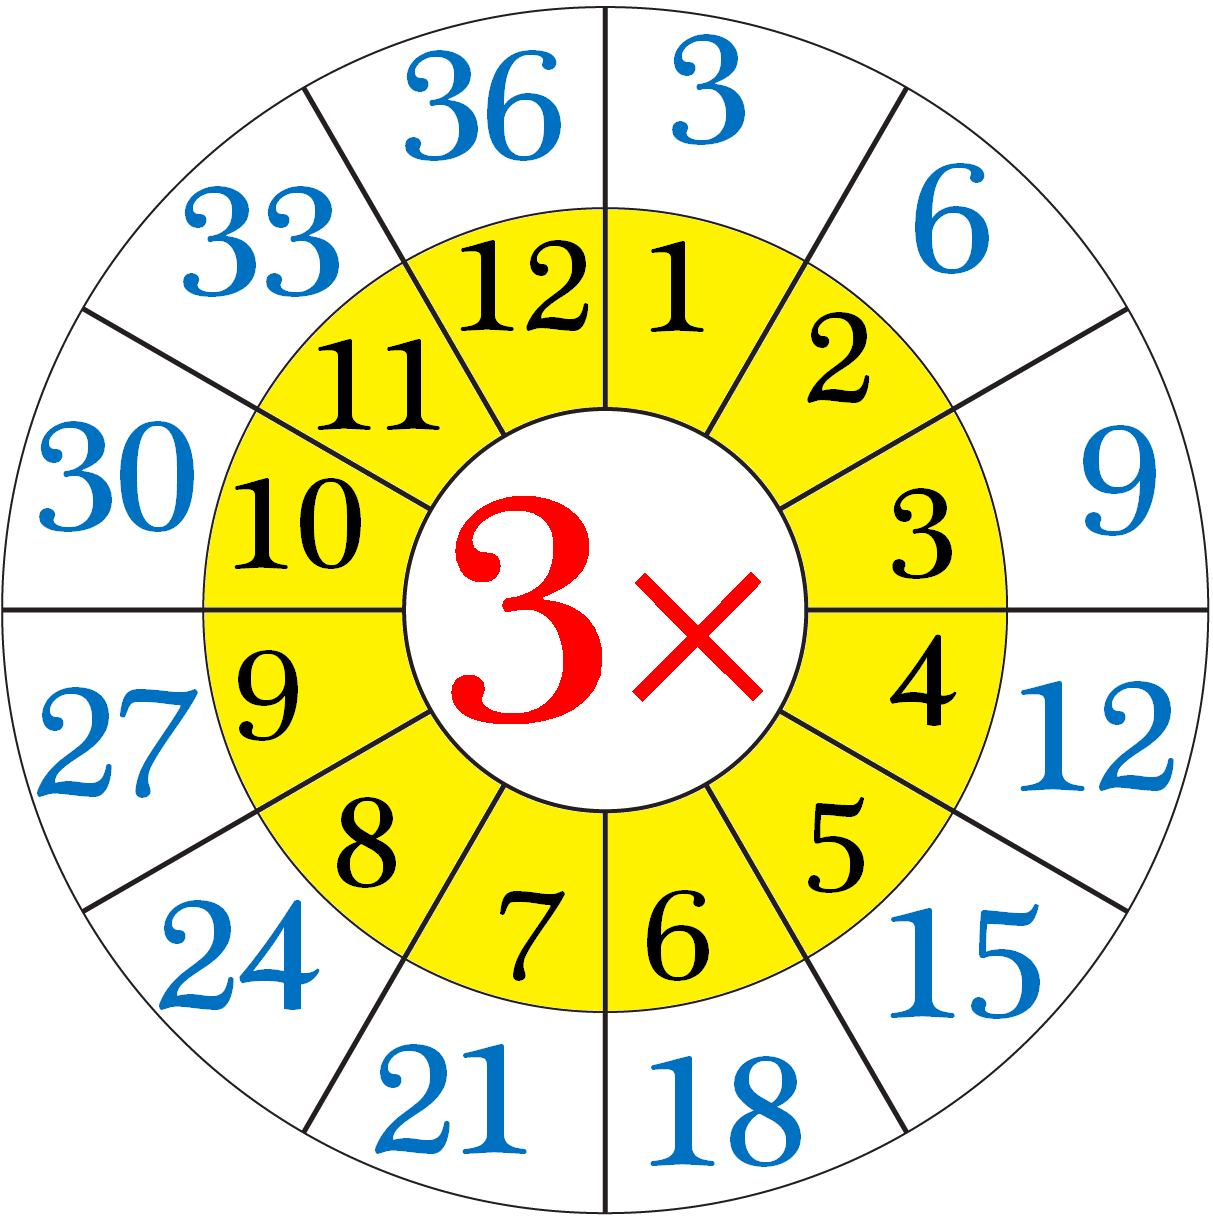 Multiplication Table of Three